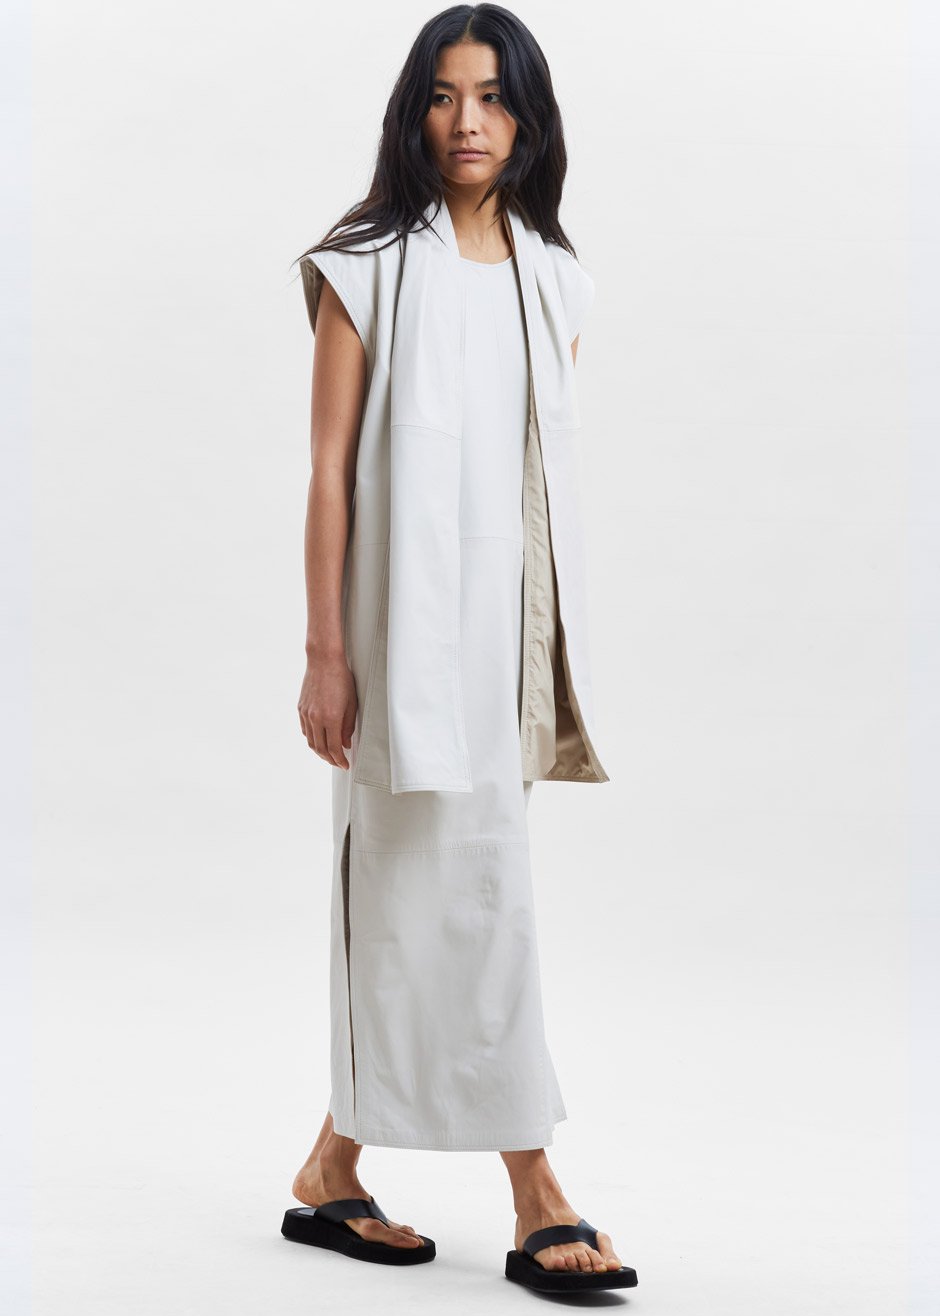 Loulou Studio Lebuan Leather Dress - Ivory - 8